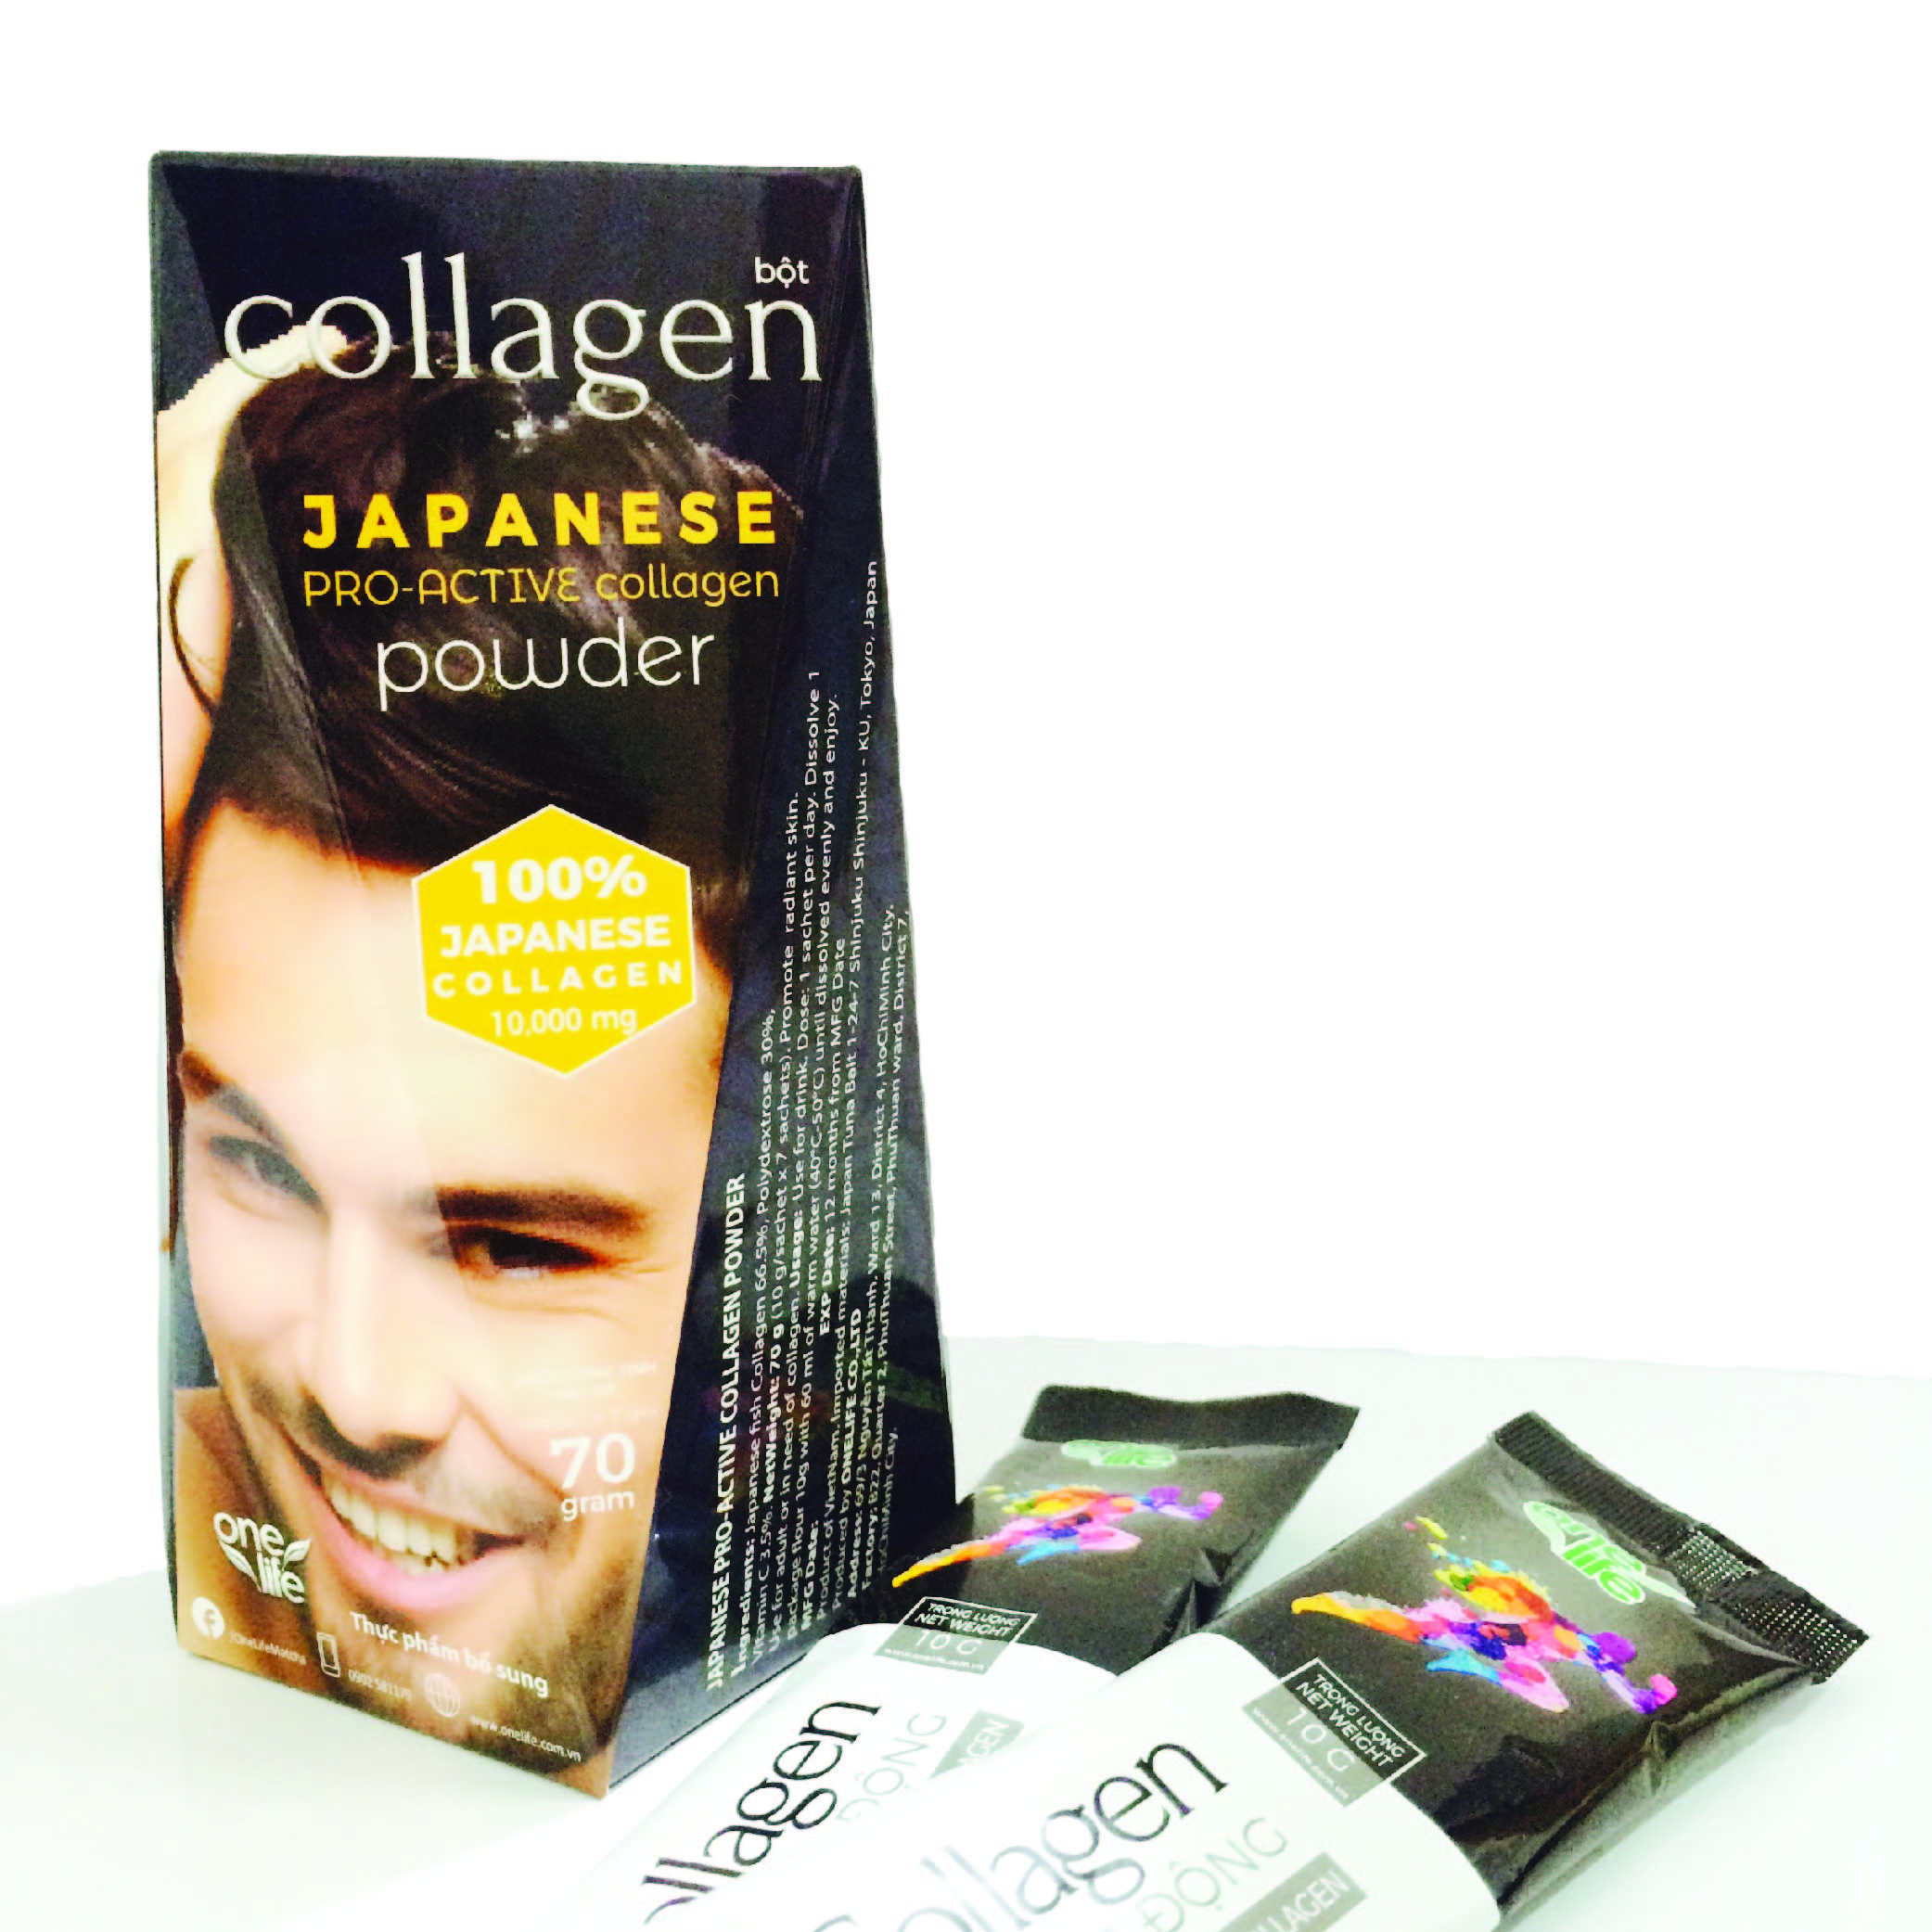 Thực phẩm Bổ sung Collagen Pro-Active OneLife (100% Bột Collagen Cá Nhật Bản) – Hộp 7 gói